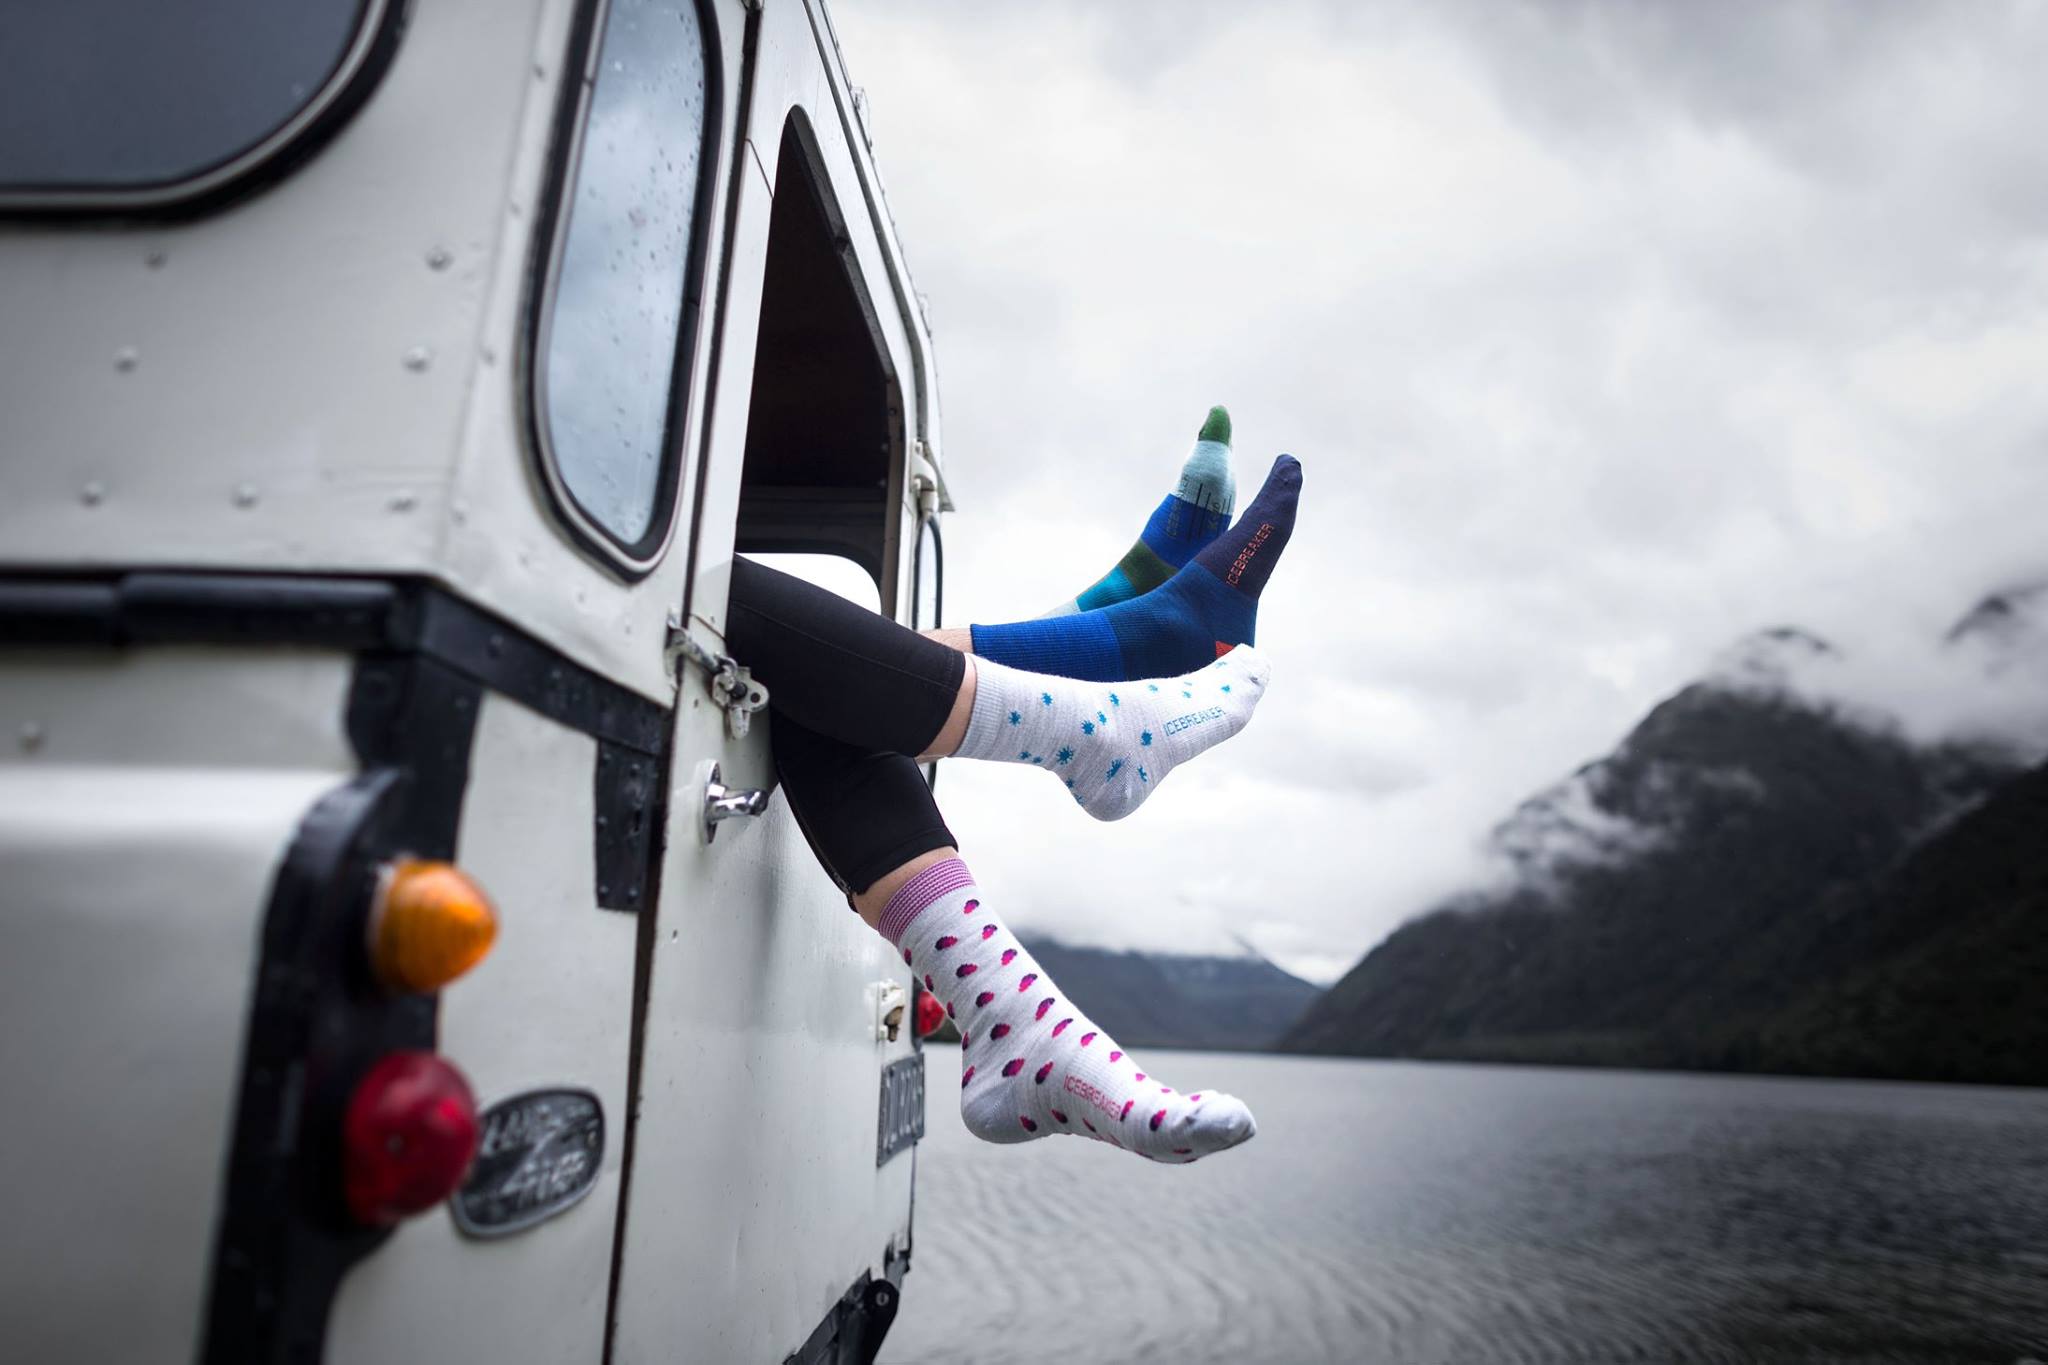 Hiking socks: 6 of the Best